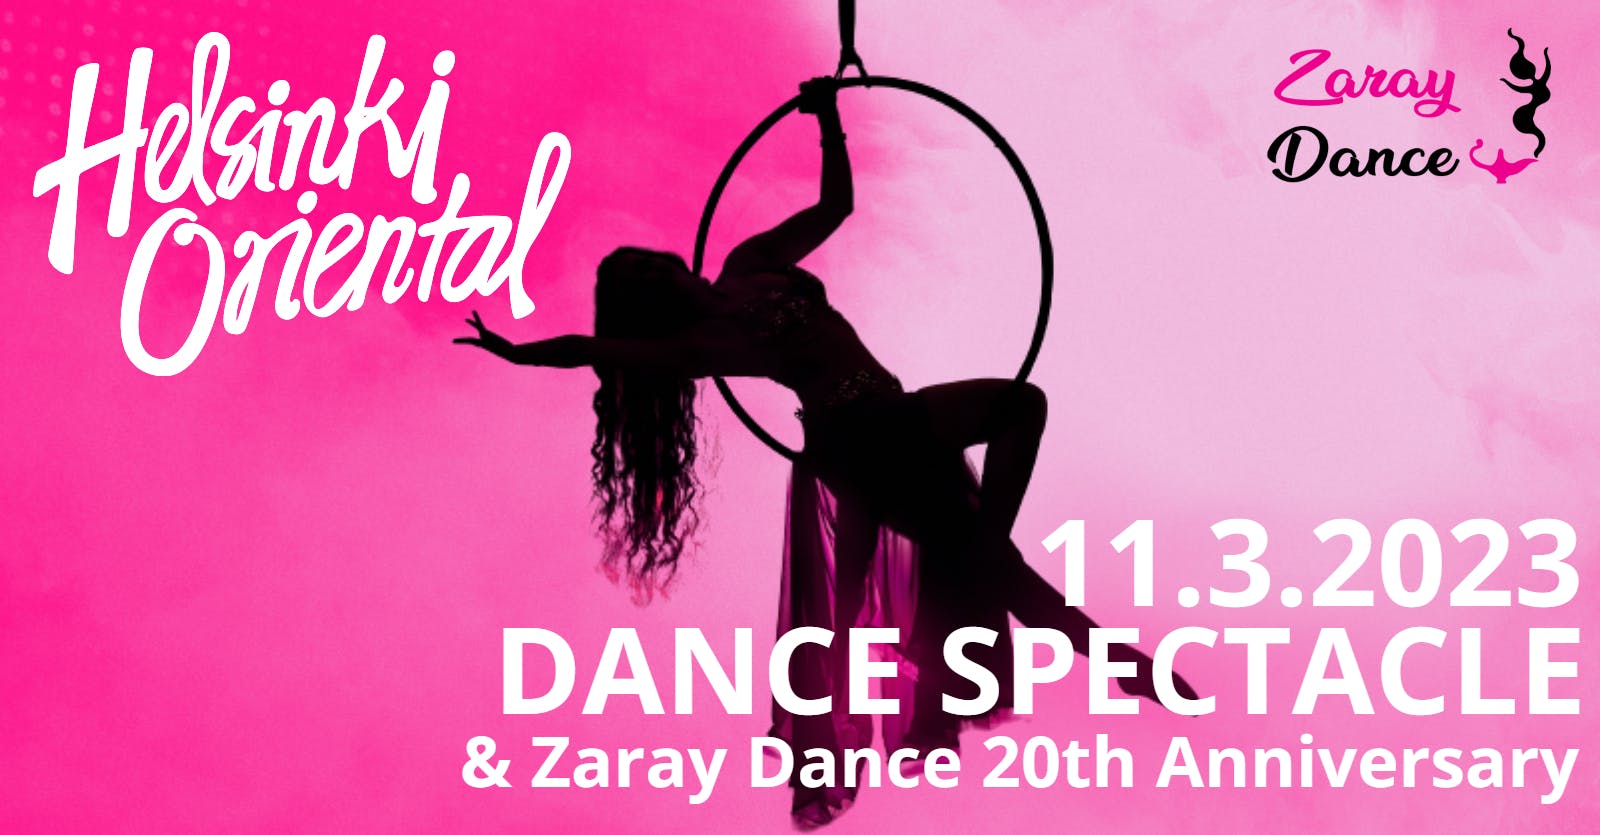 Helsinki Oriental Dance Spectacle & Zaray Dance 20th Anniversary 11.3.2023